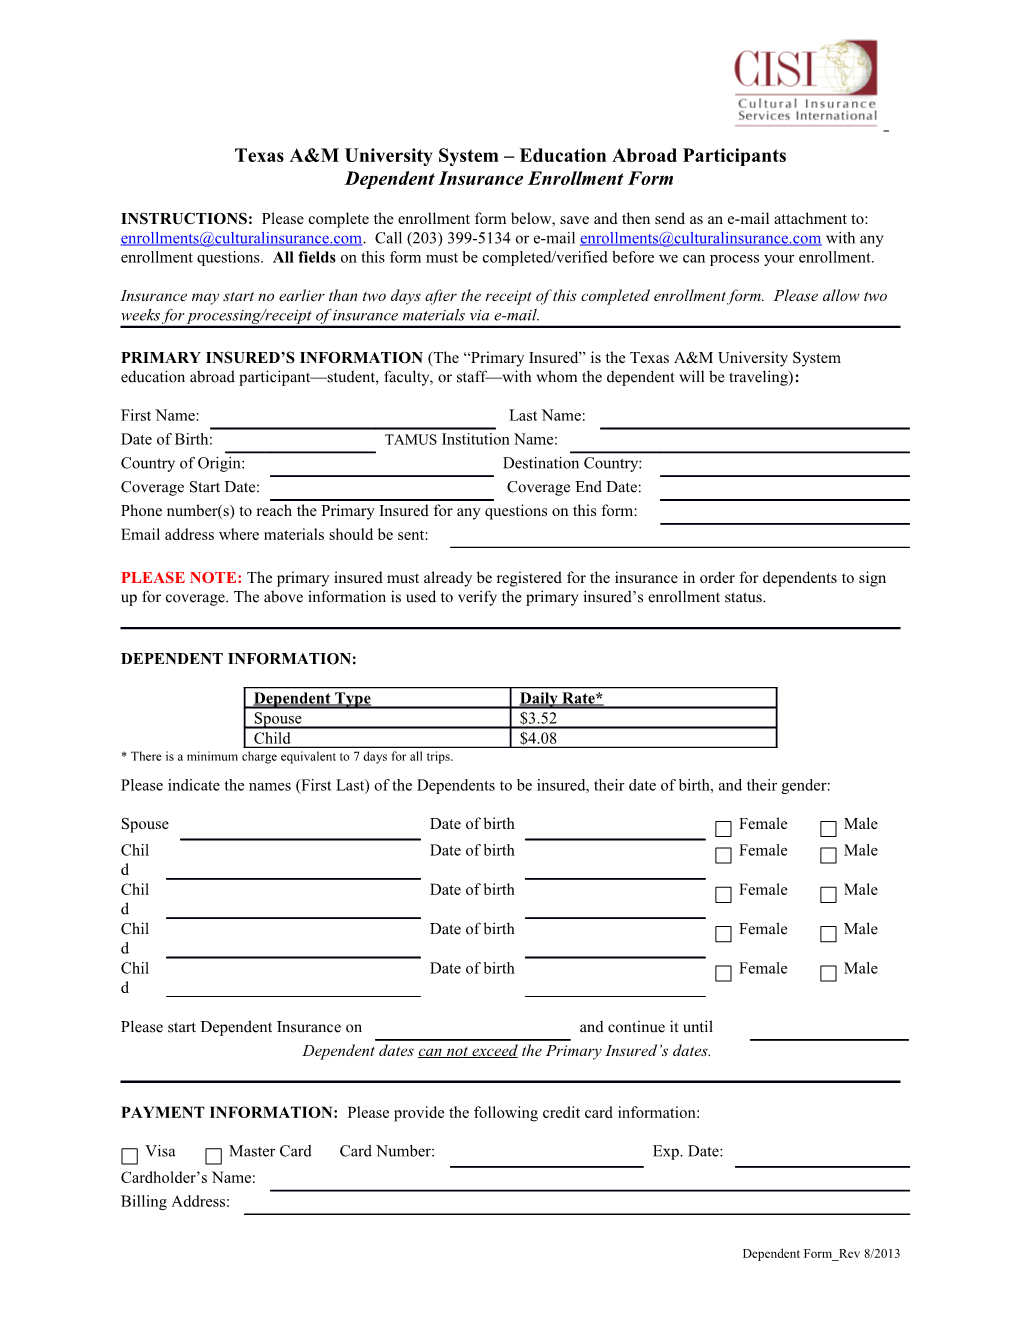 University of Minnesota (U of M) Dependent Insurance Enrollment Form